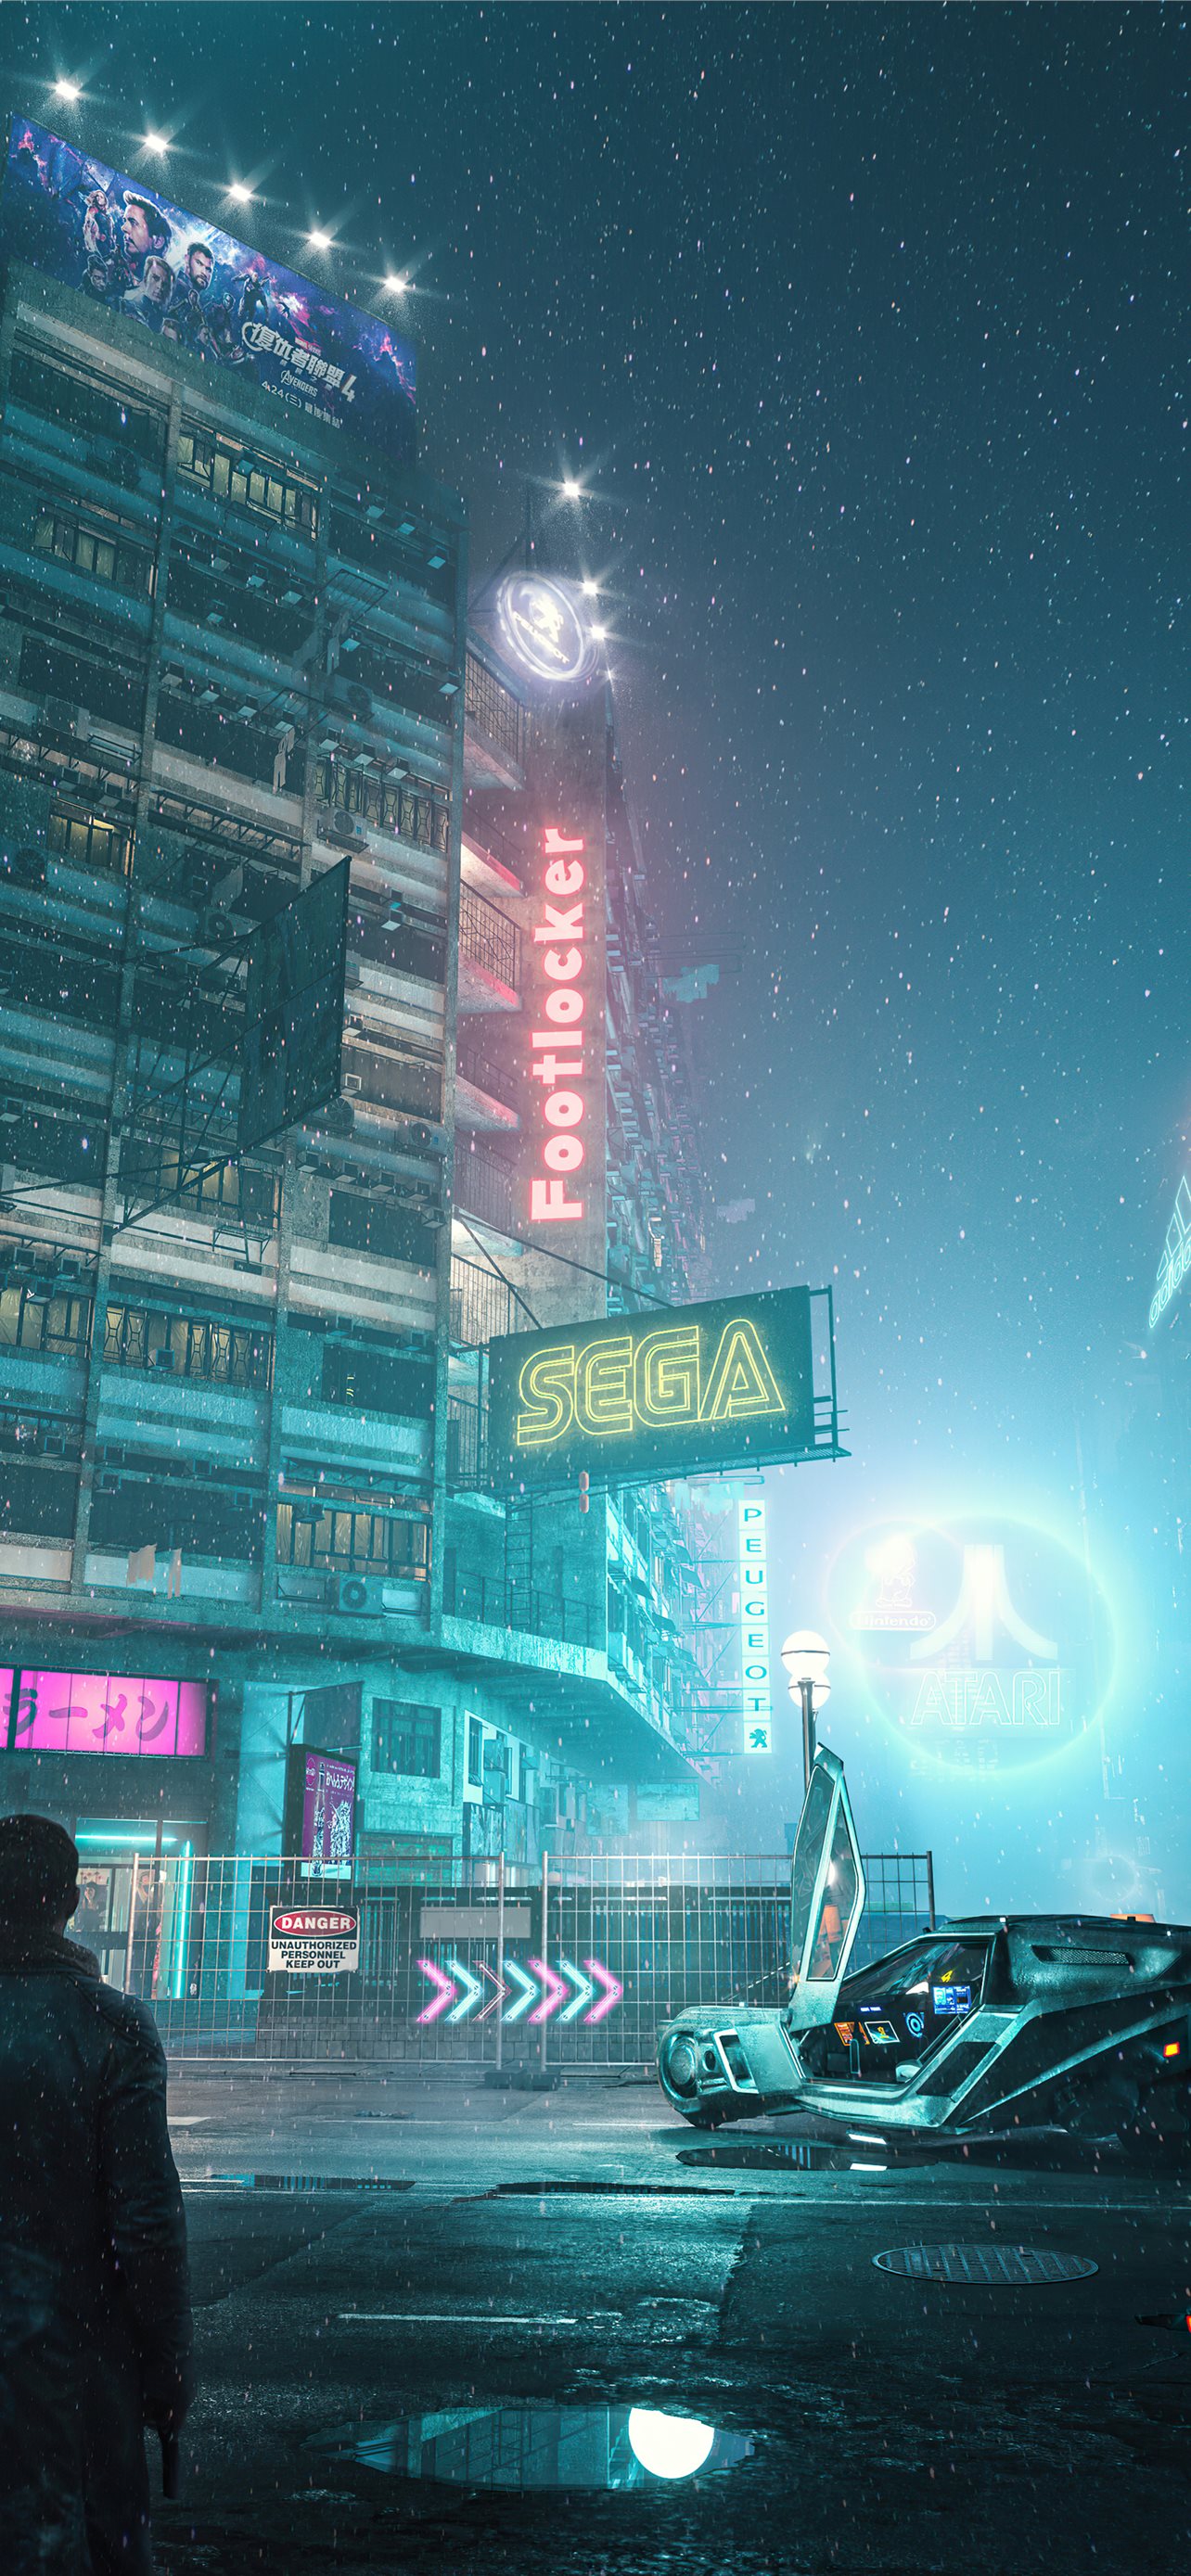 Blade Runner 2049 Tokyo Cyberpunk 4k Sony Xperia X. iPhone Wallpaper Free Download